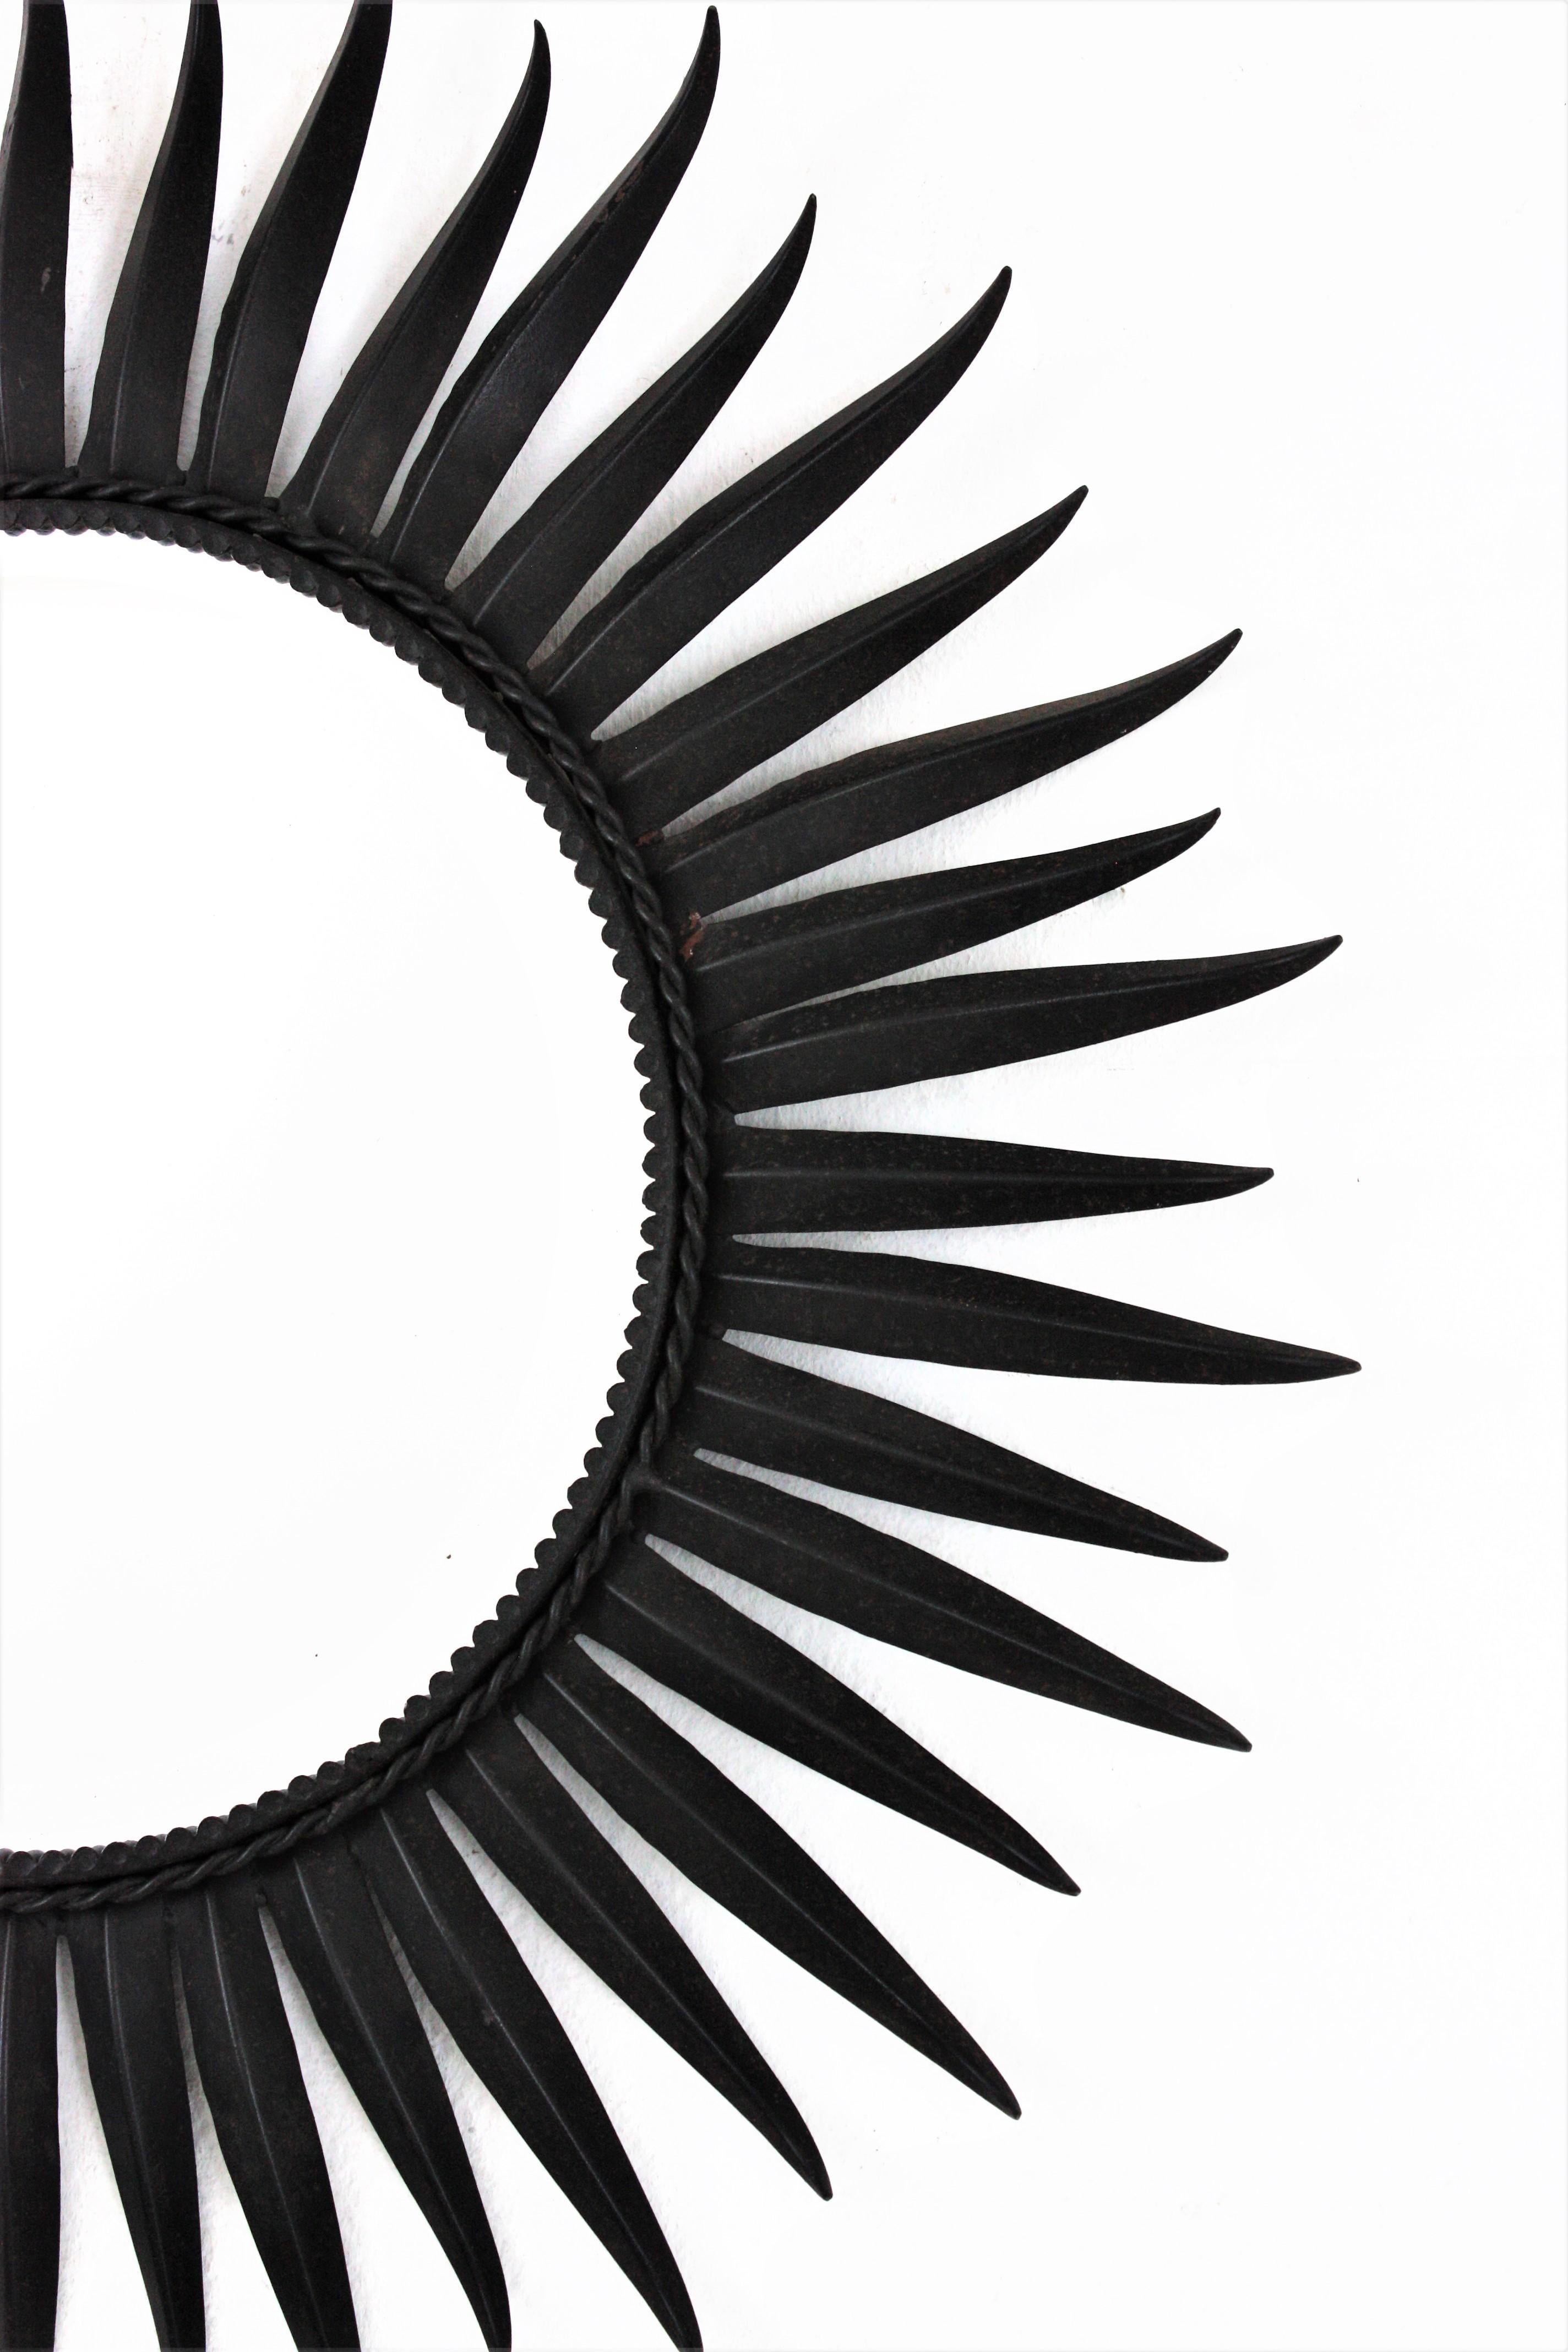 Sunburst Eyelash Mirror in Black Wrought Iron In Good Condition For Sale In Barcelona, ES